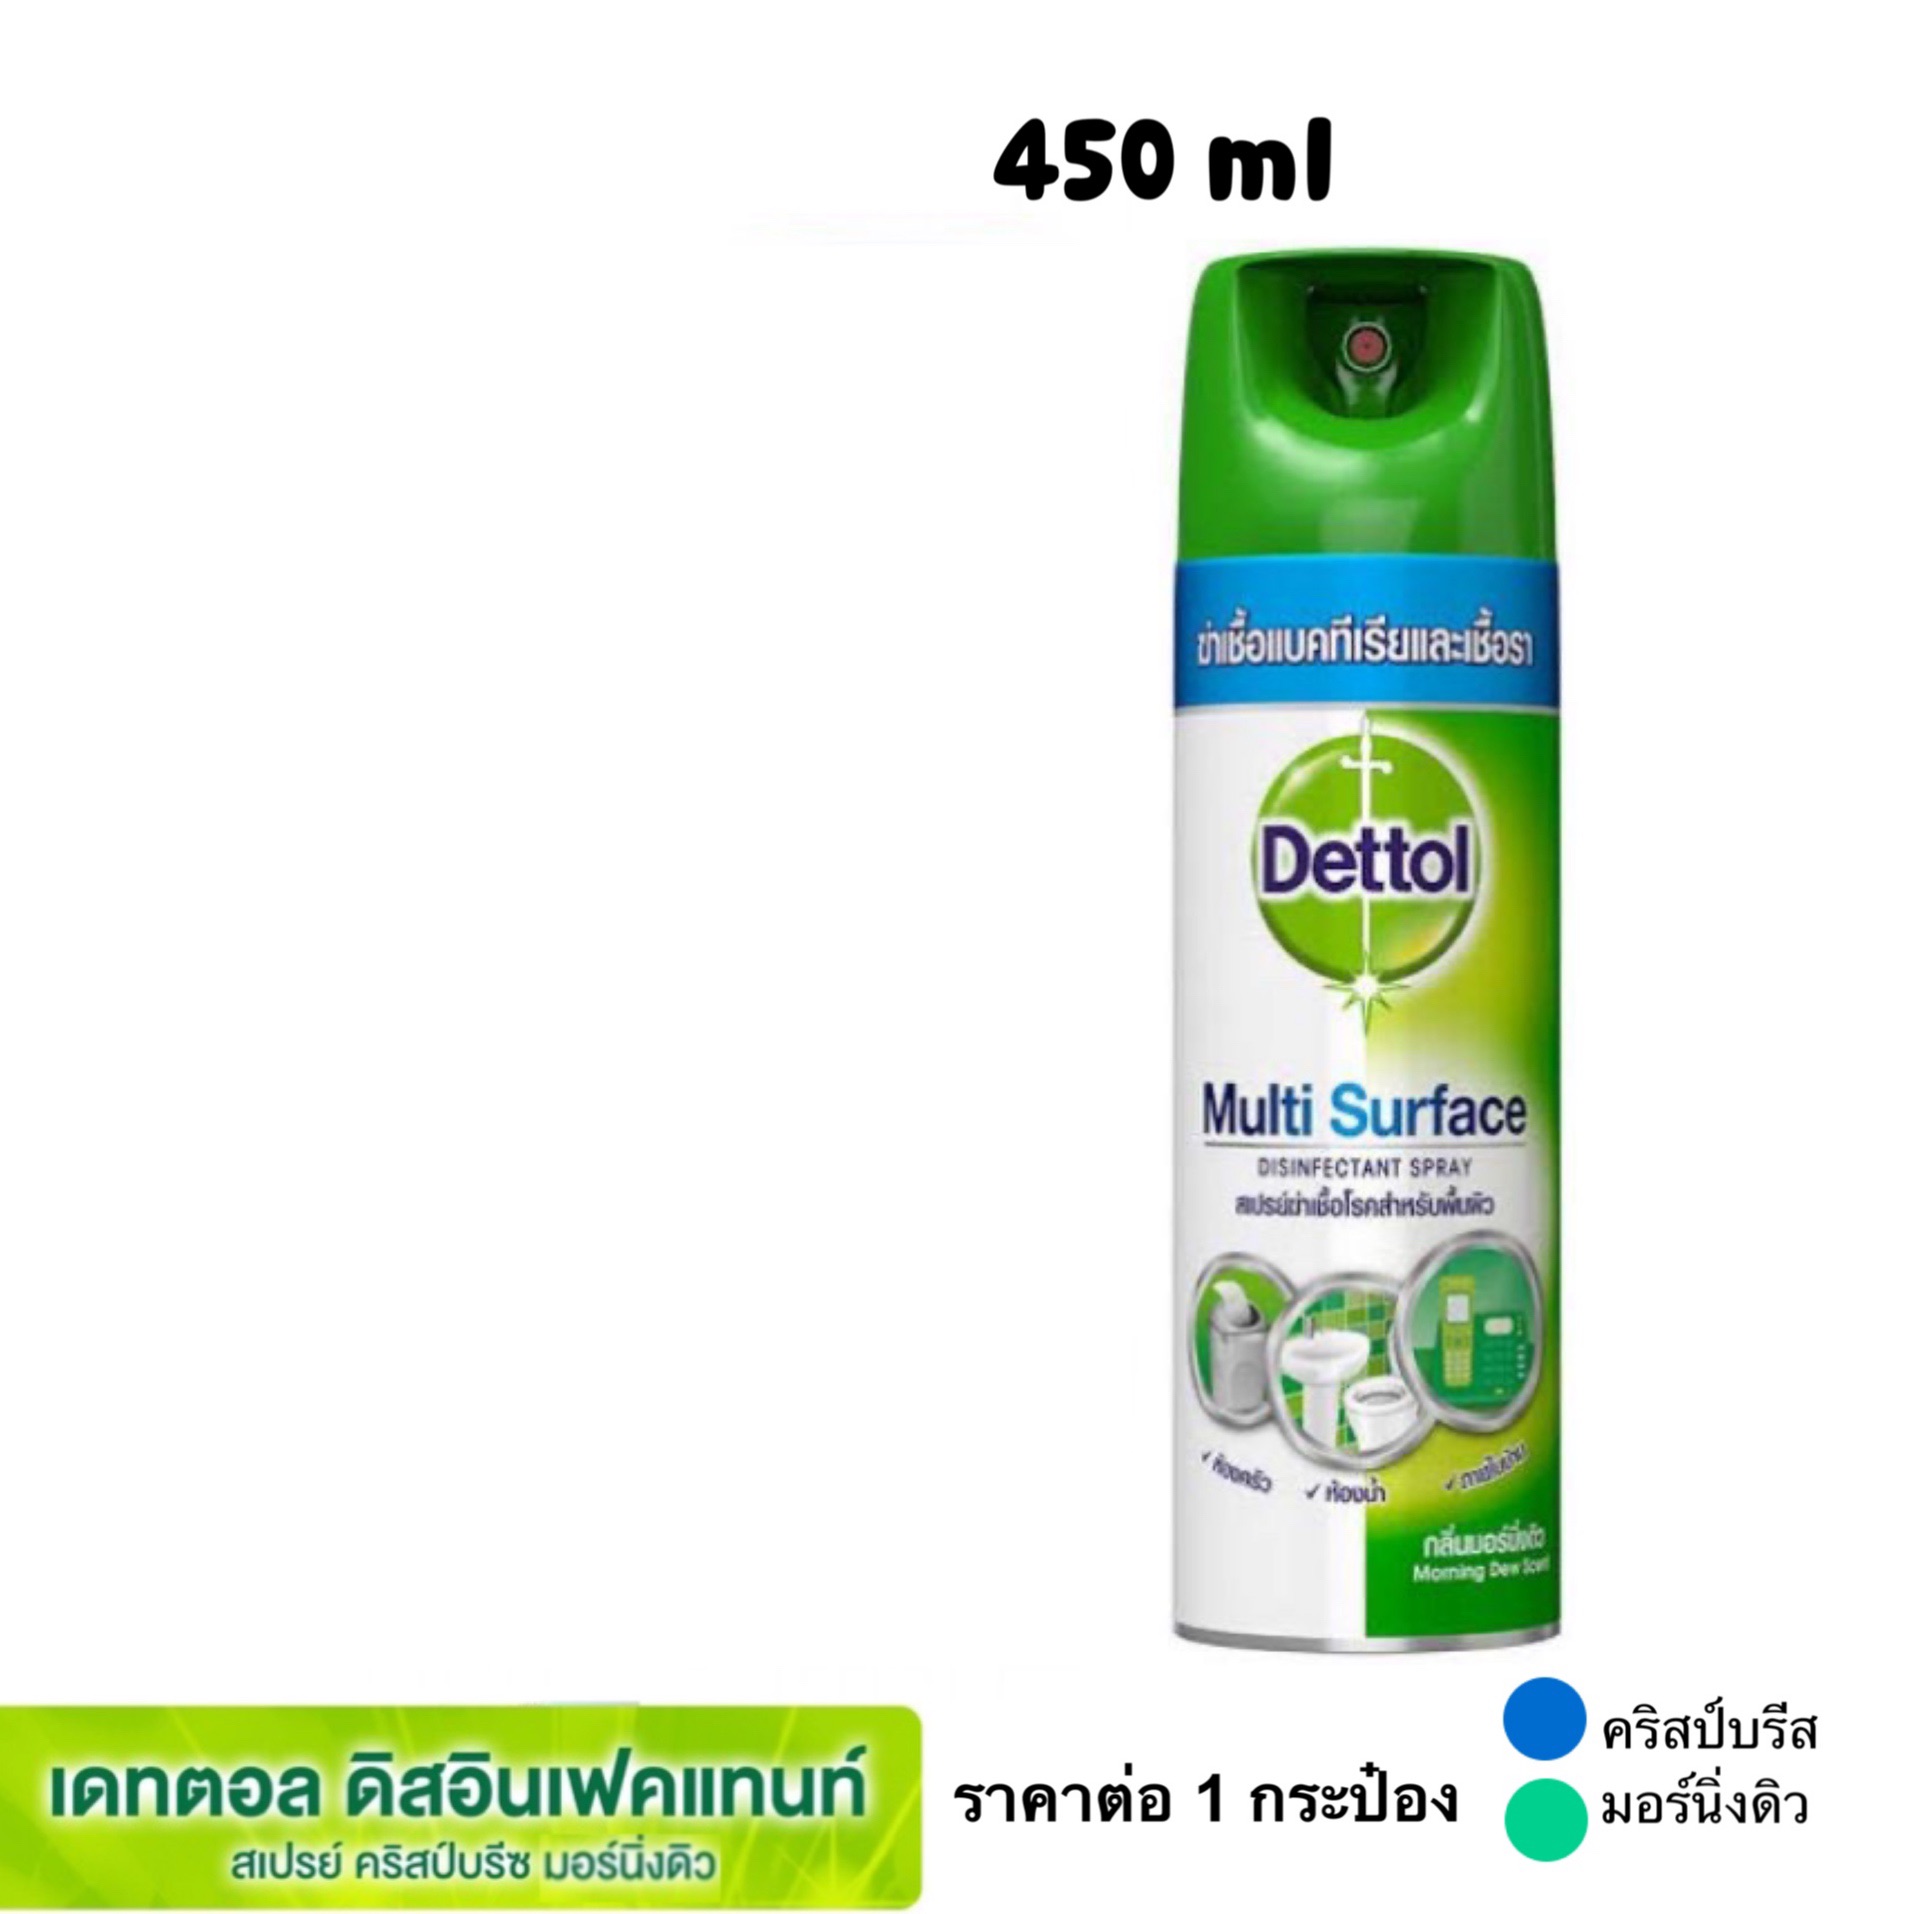 Dettol spray สเปรย์ฆ่าเชื้อ 225 ml , 450 ml  multisurface disinfectant  color มอร์นิ่งดิว 450 ml